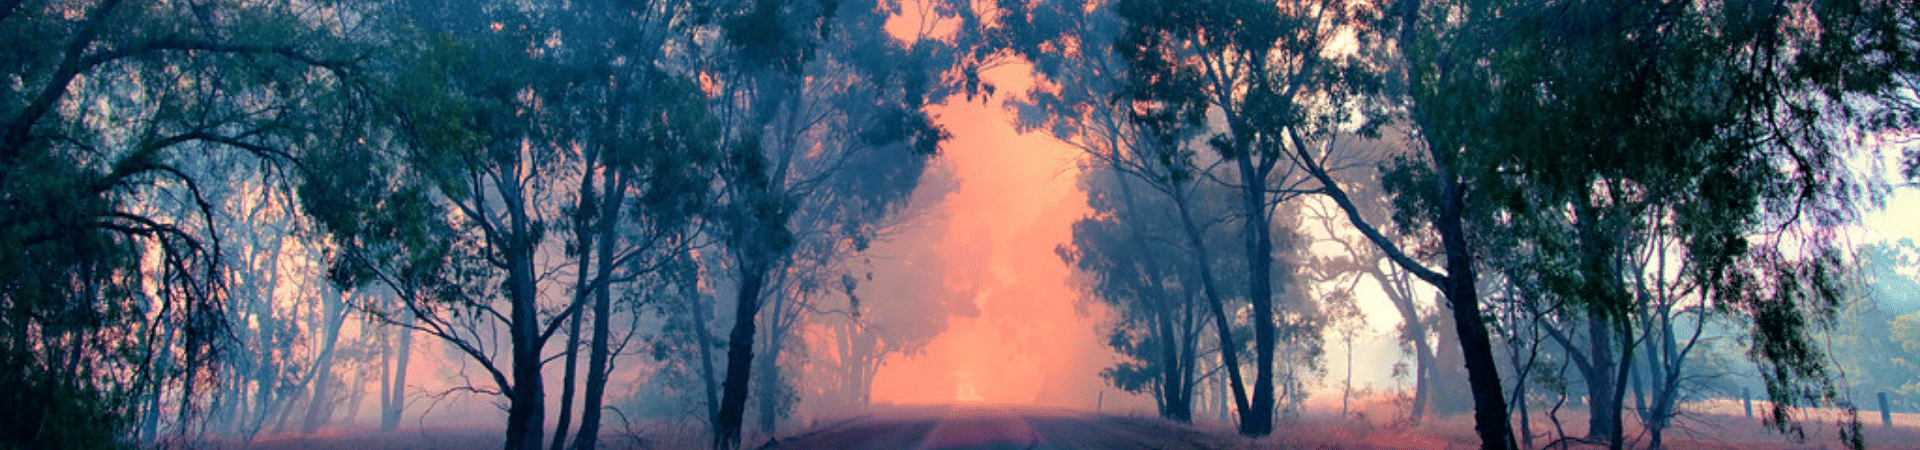 Bushfire scene